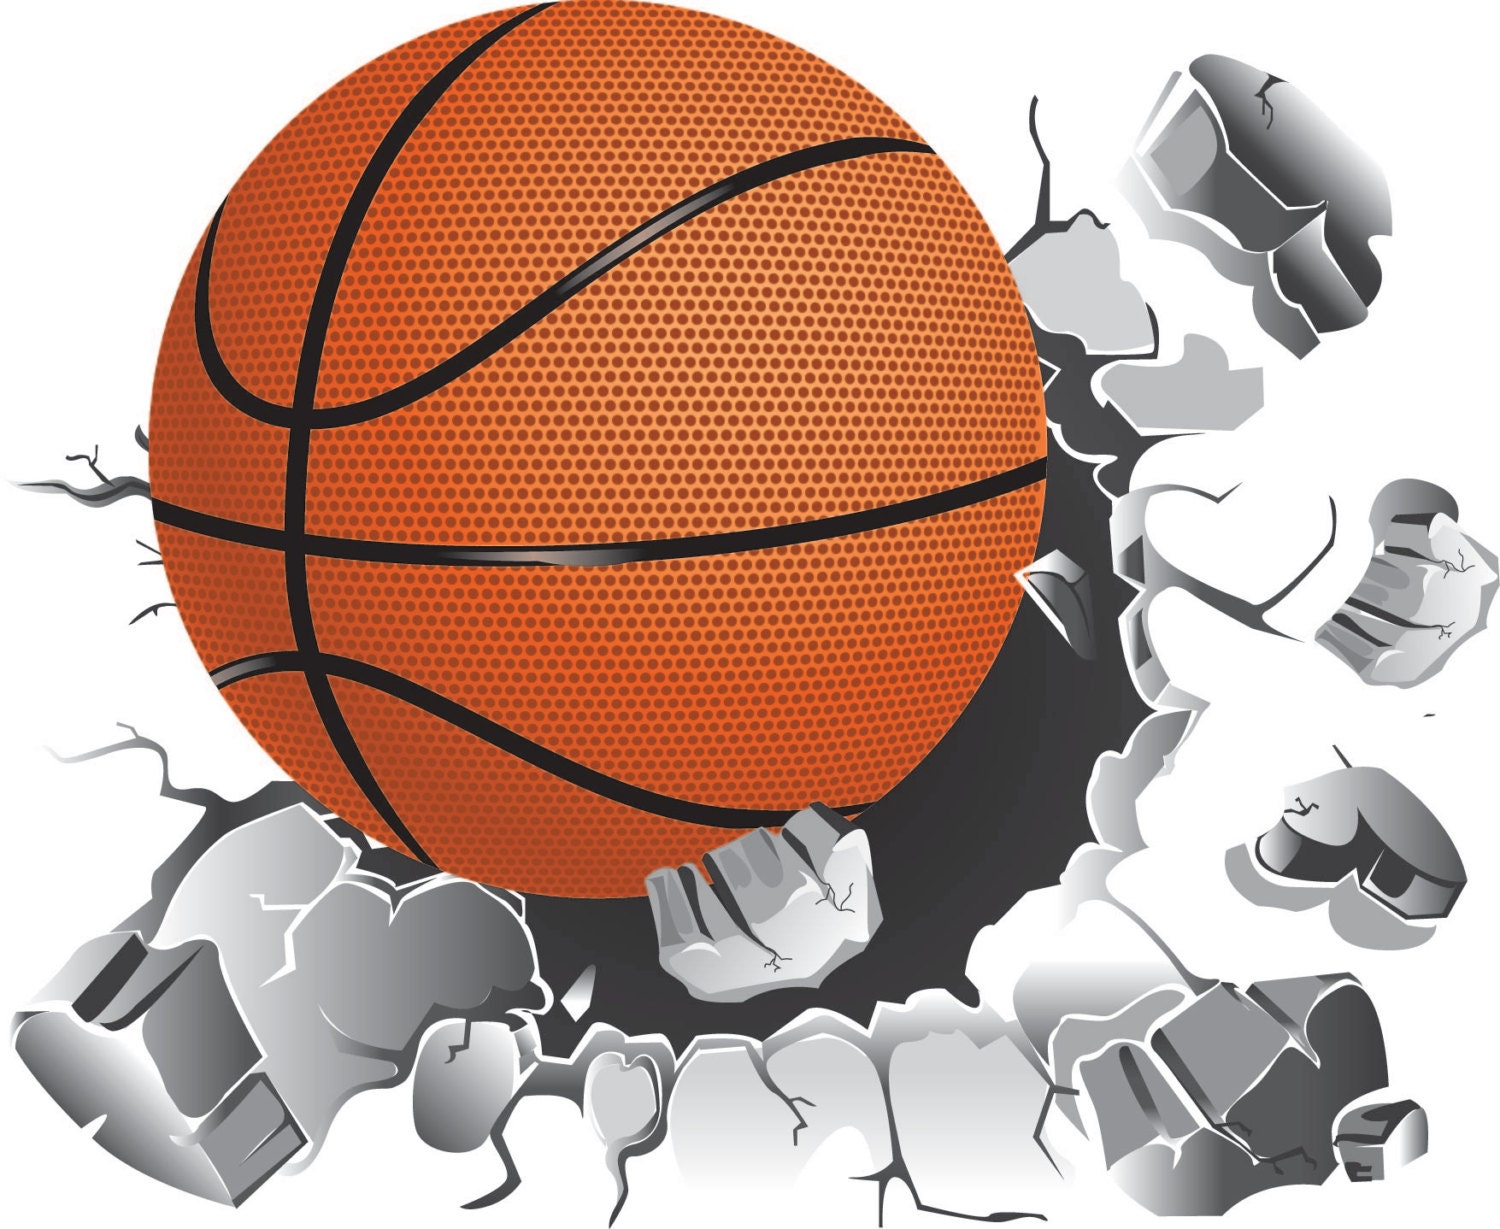 NKTIER 3D Basketball Wall Sticker Self-adhesive Flying Fire